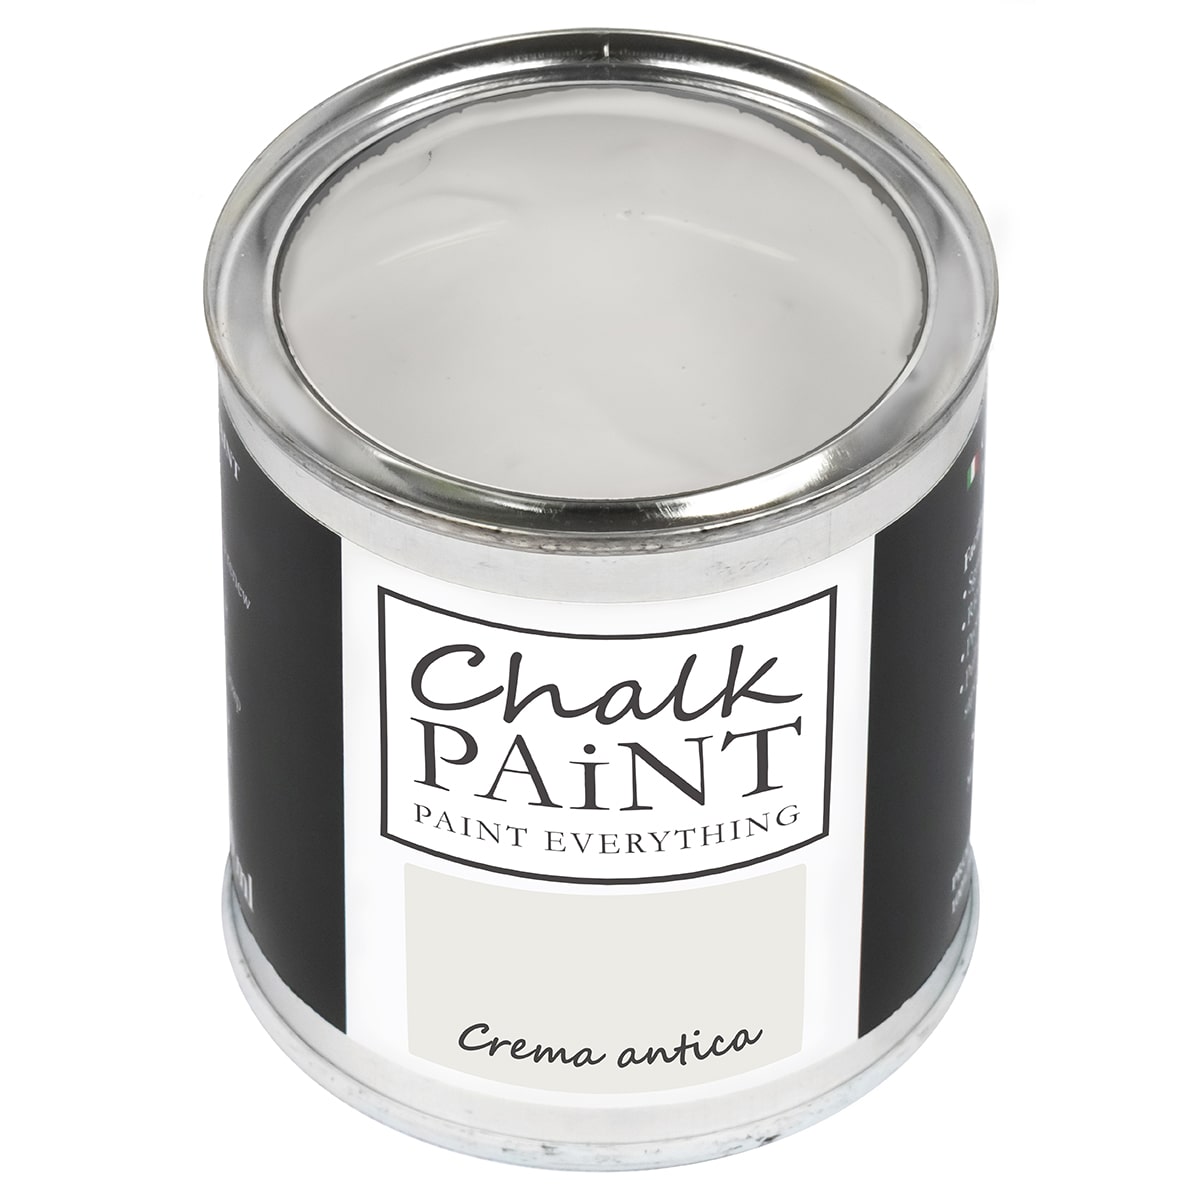 Chalk Paint Crema Antica